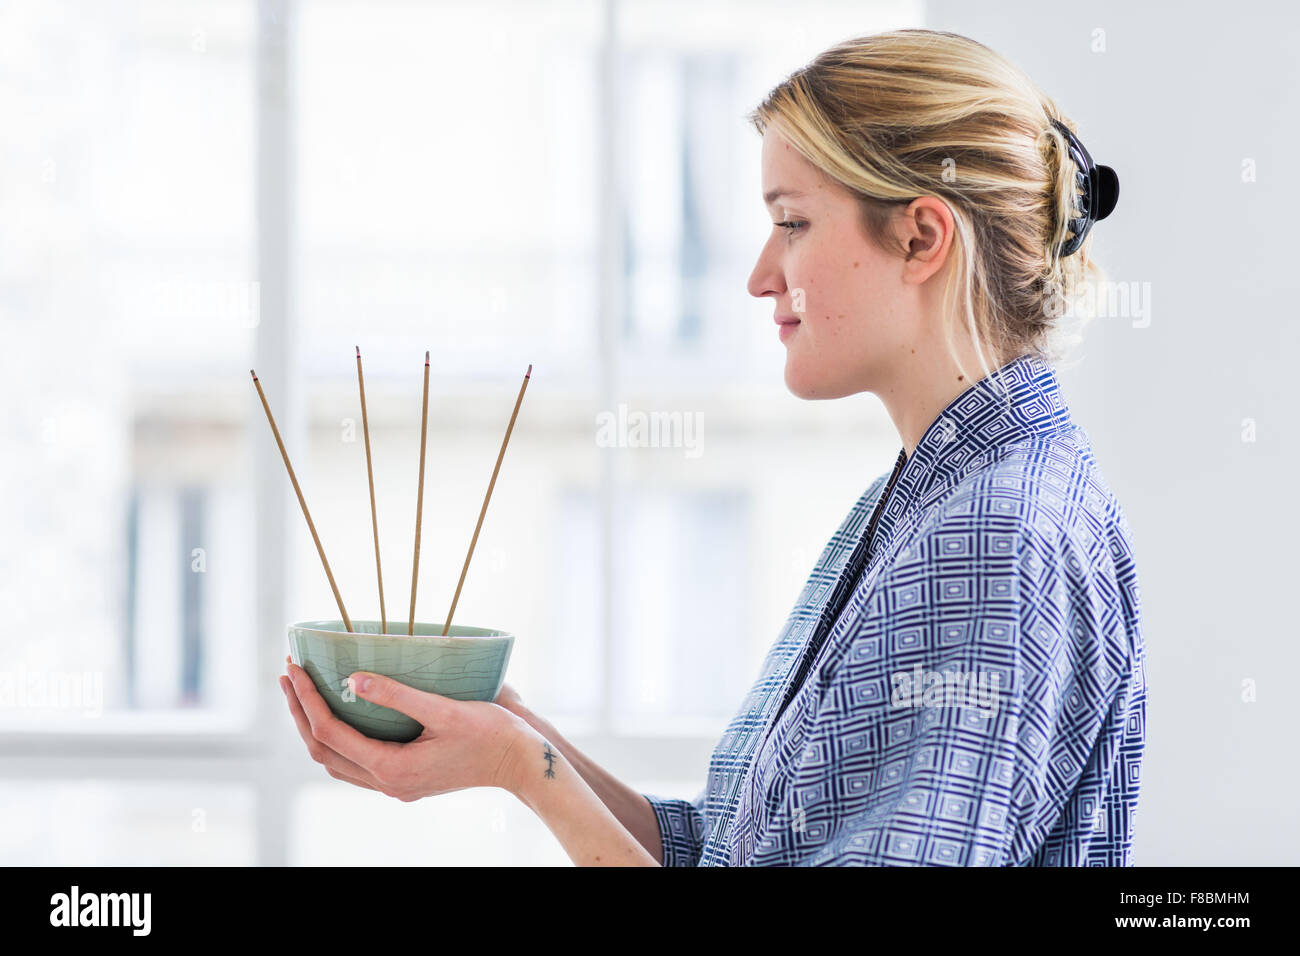 Woman burning incense. Stock Photo